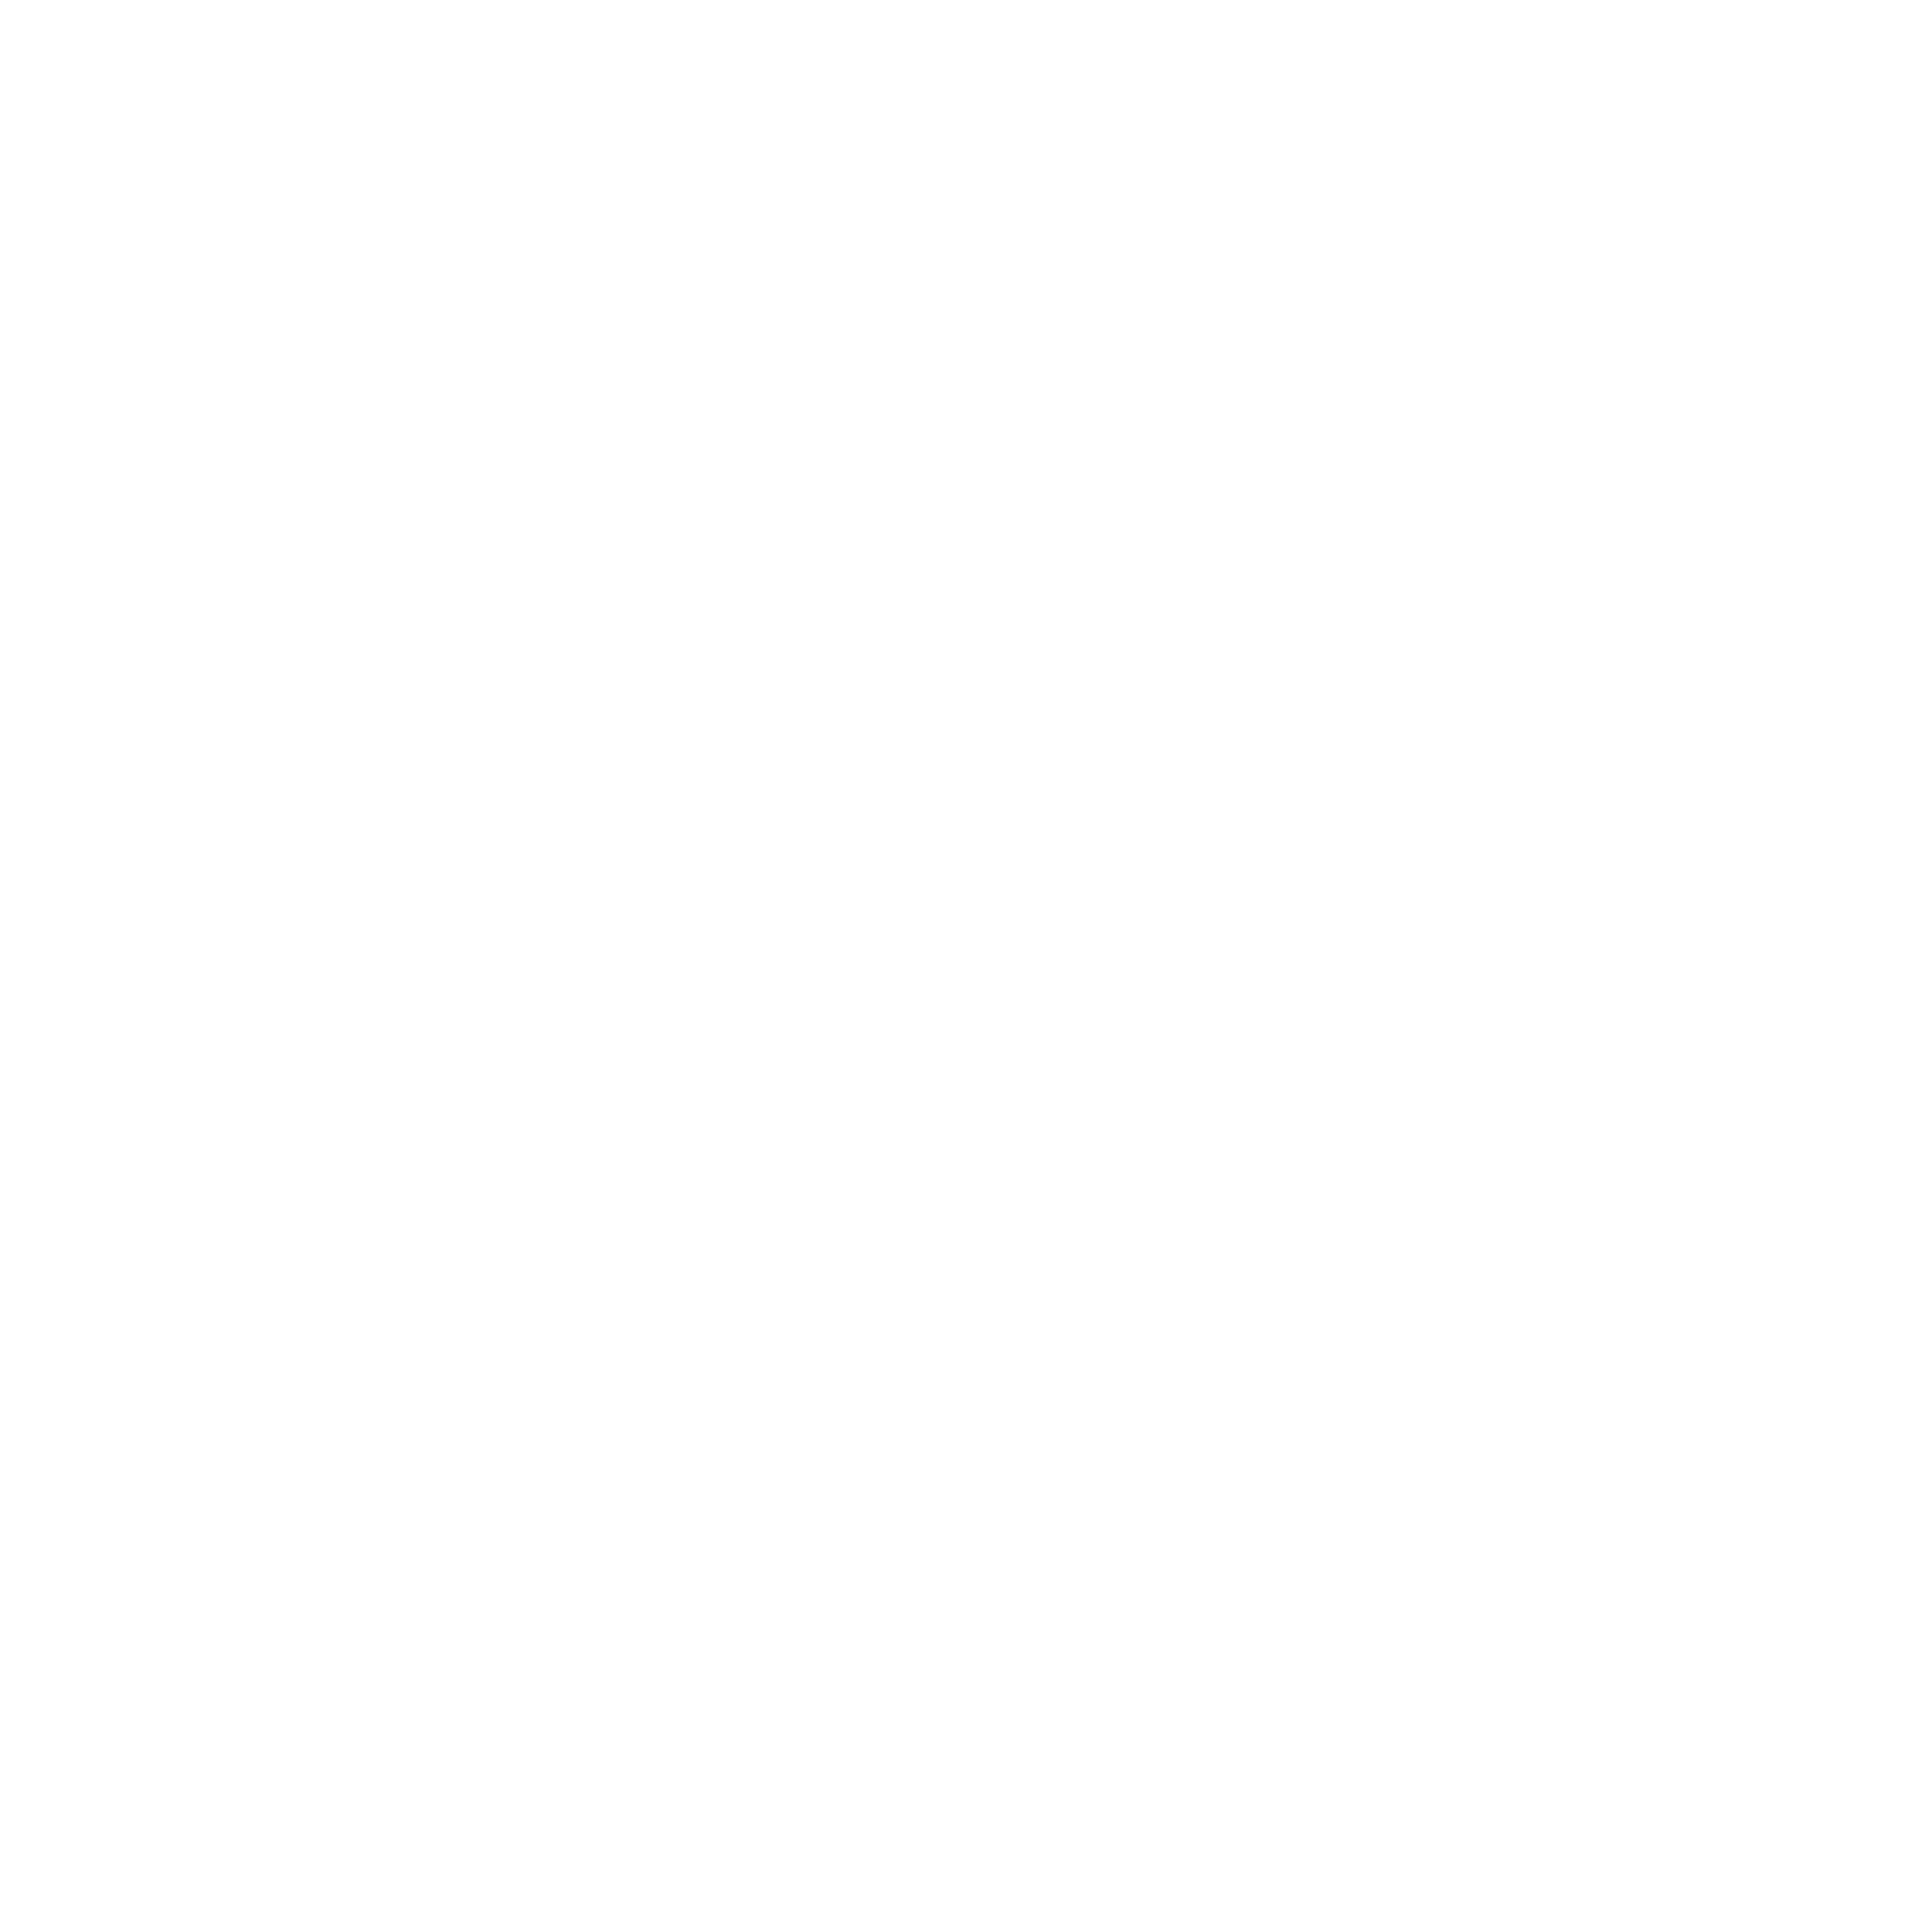 Luchi Alonzo - Fotografía